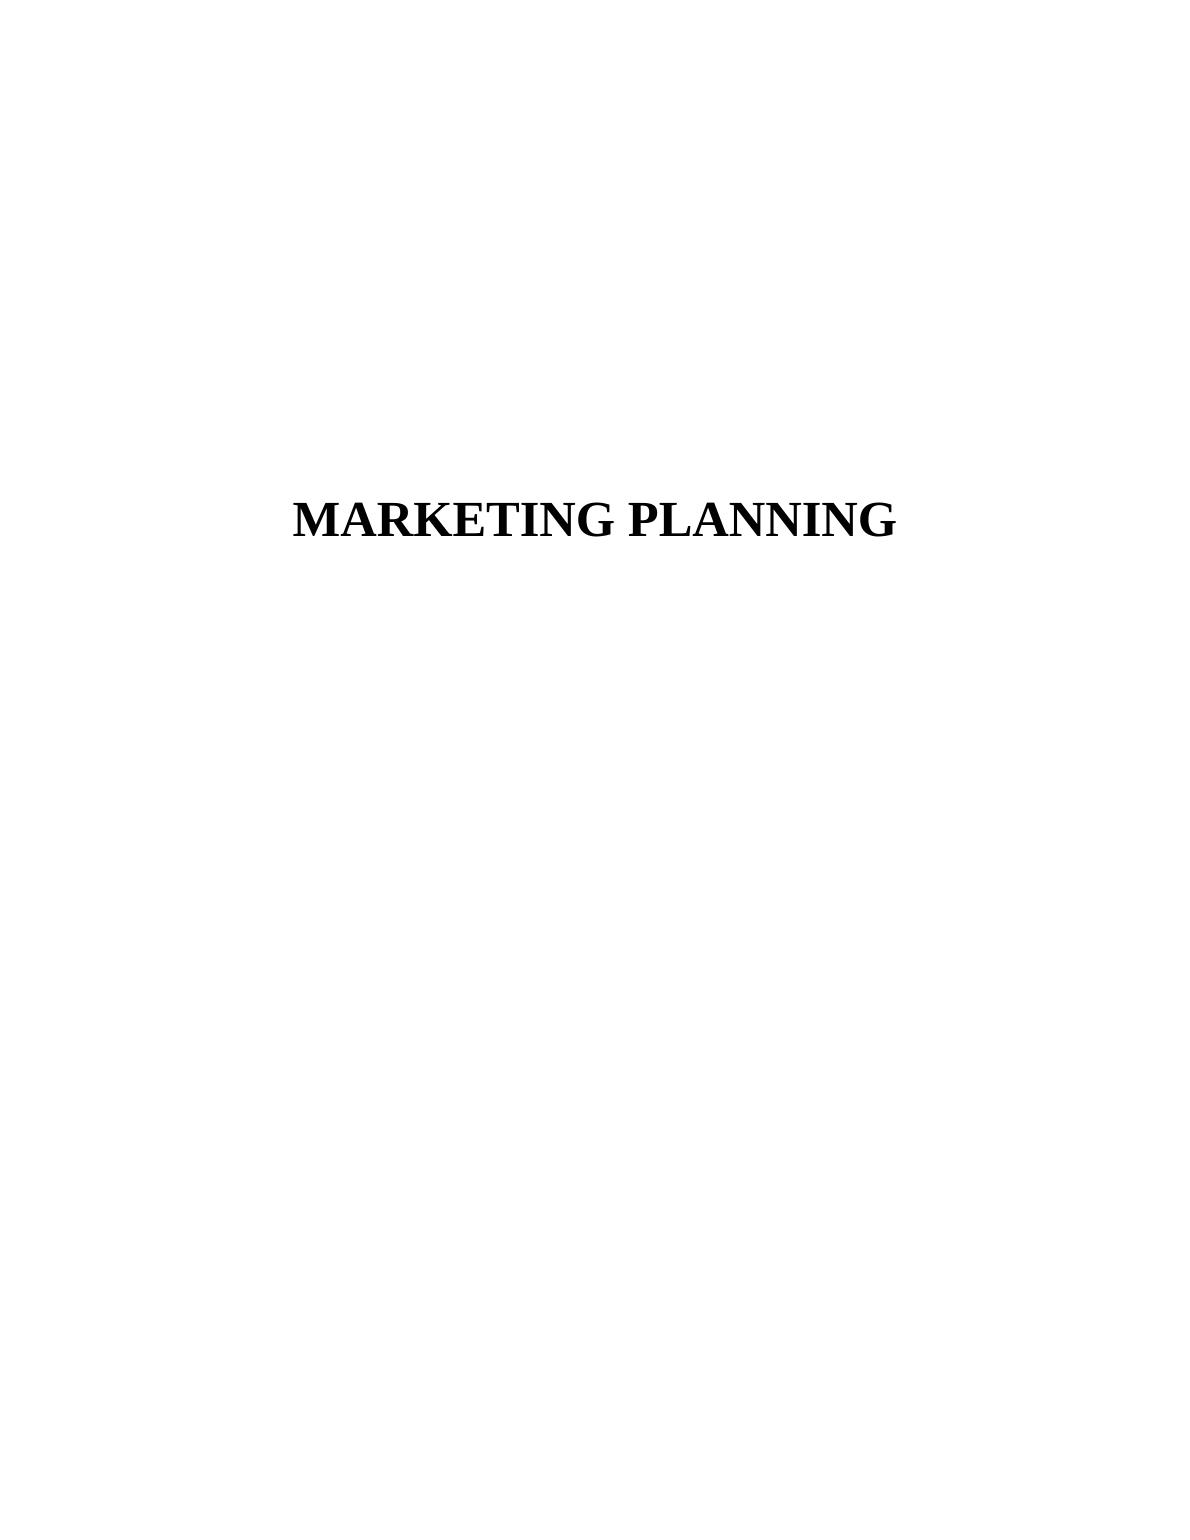 Marketing Planning of Britvic Company - Report_1